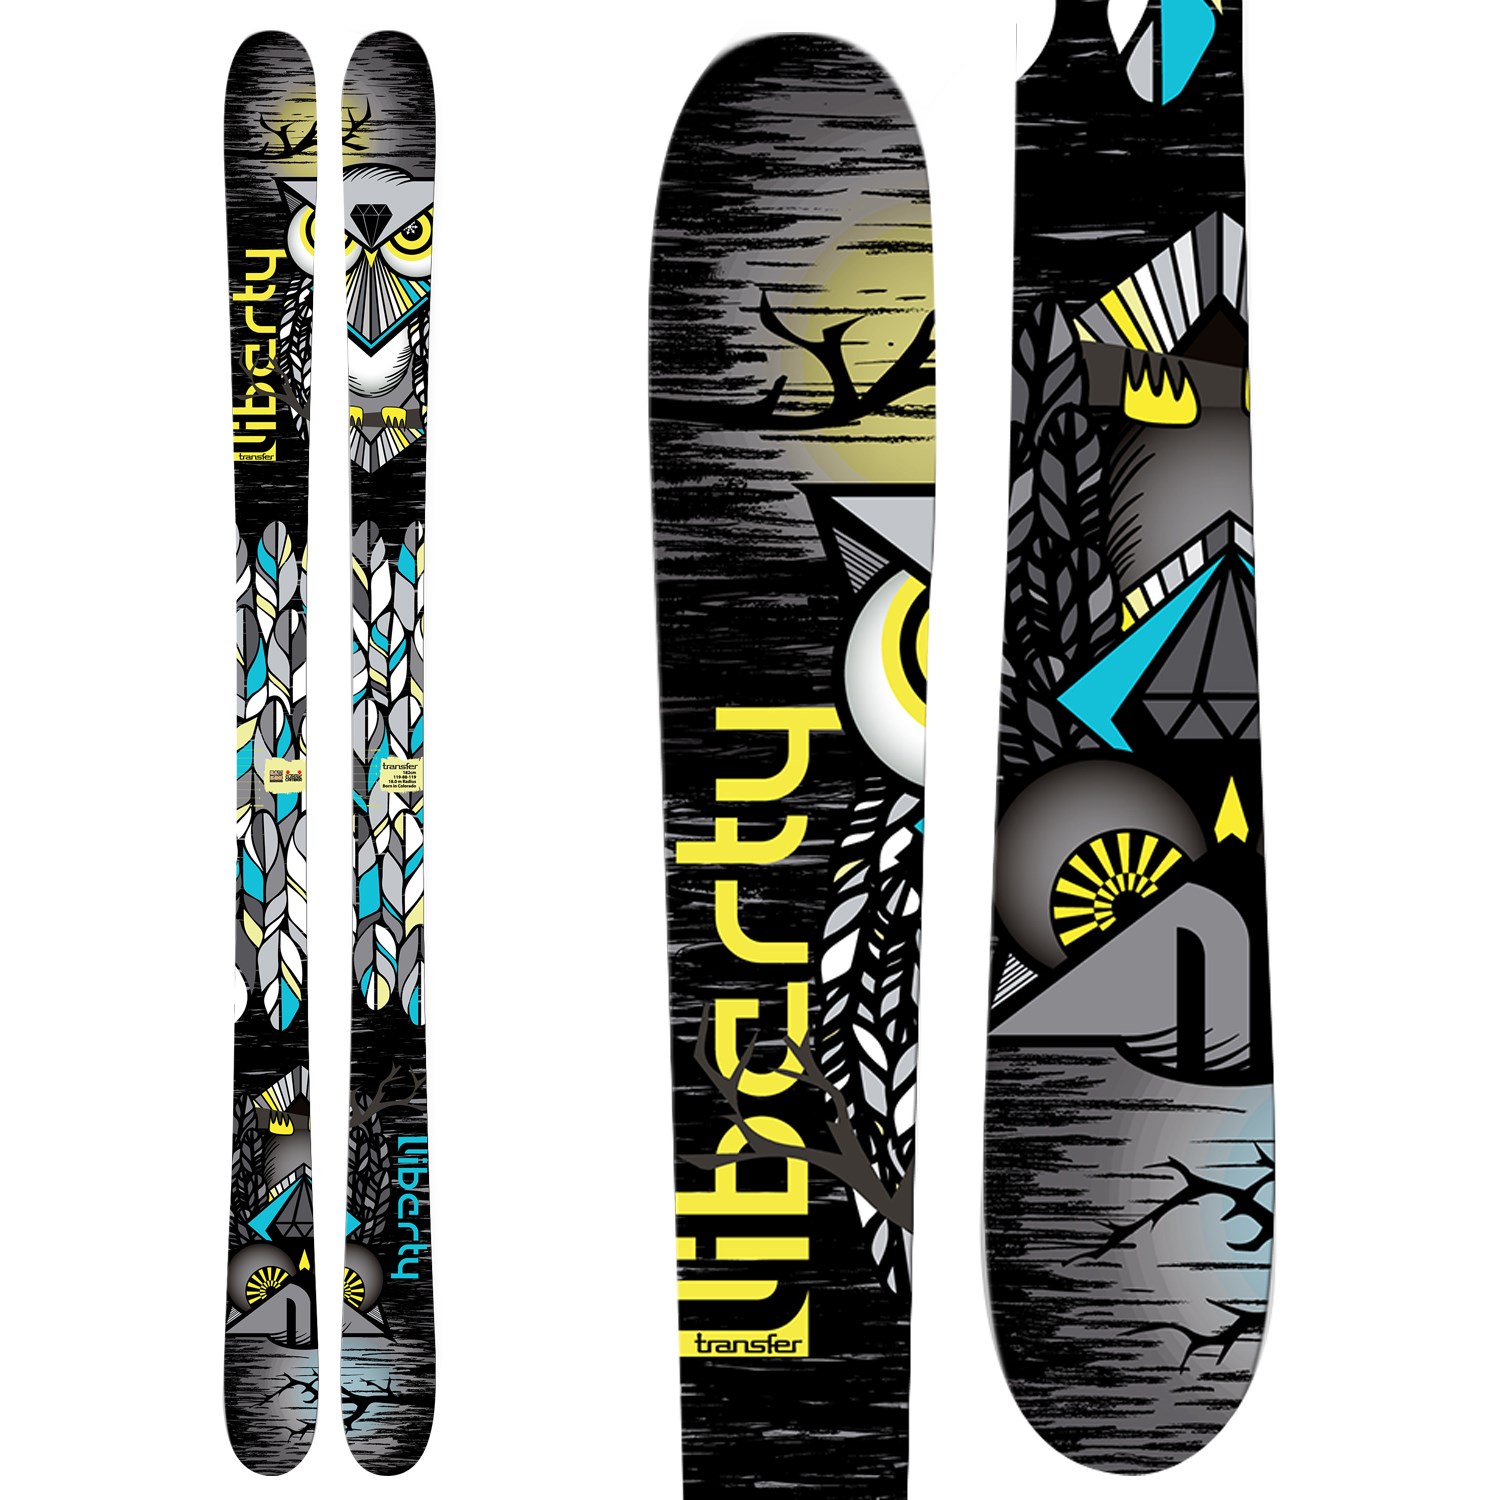 handig straal Boos Liberty Transfer Skis 2015 | evo